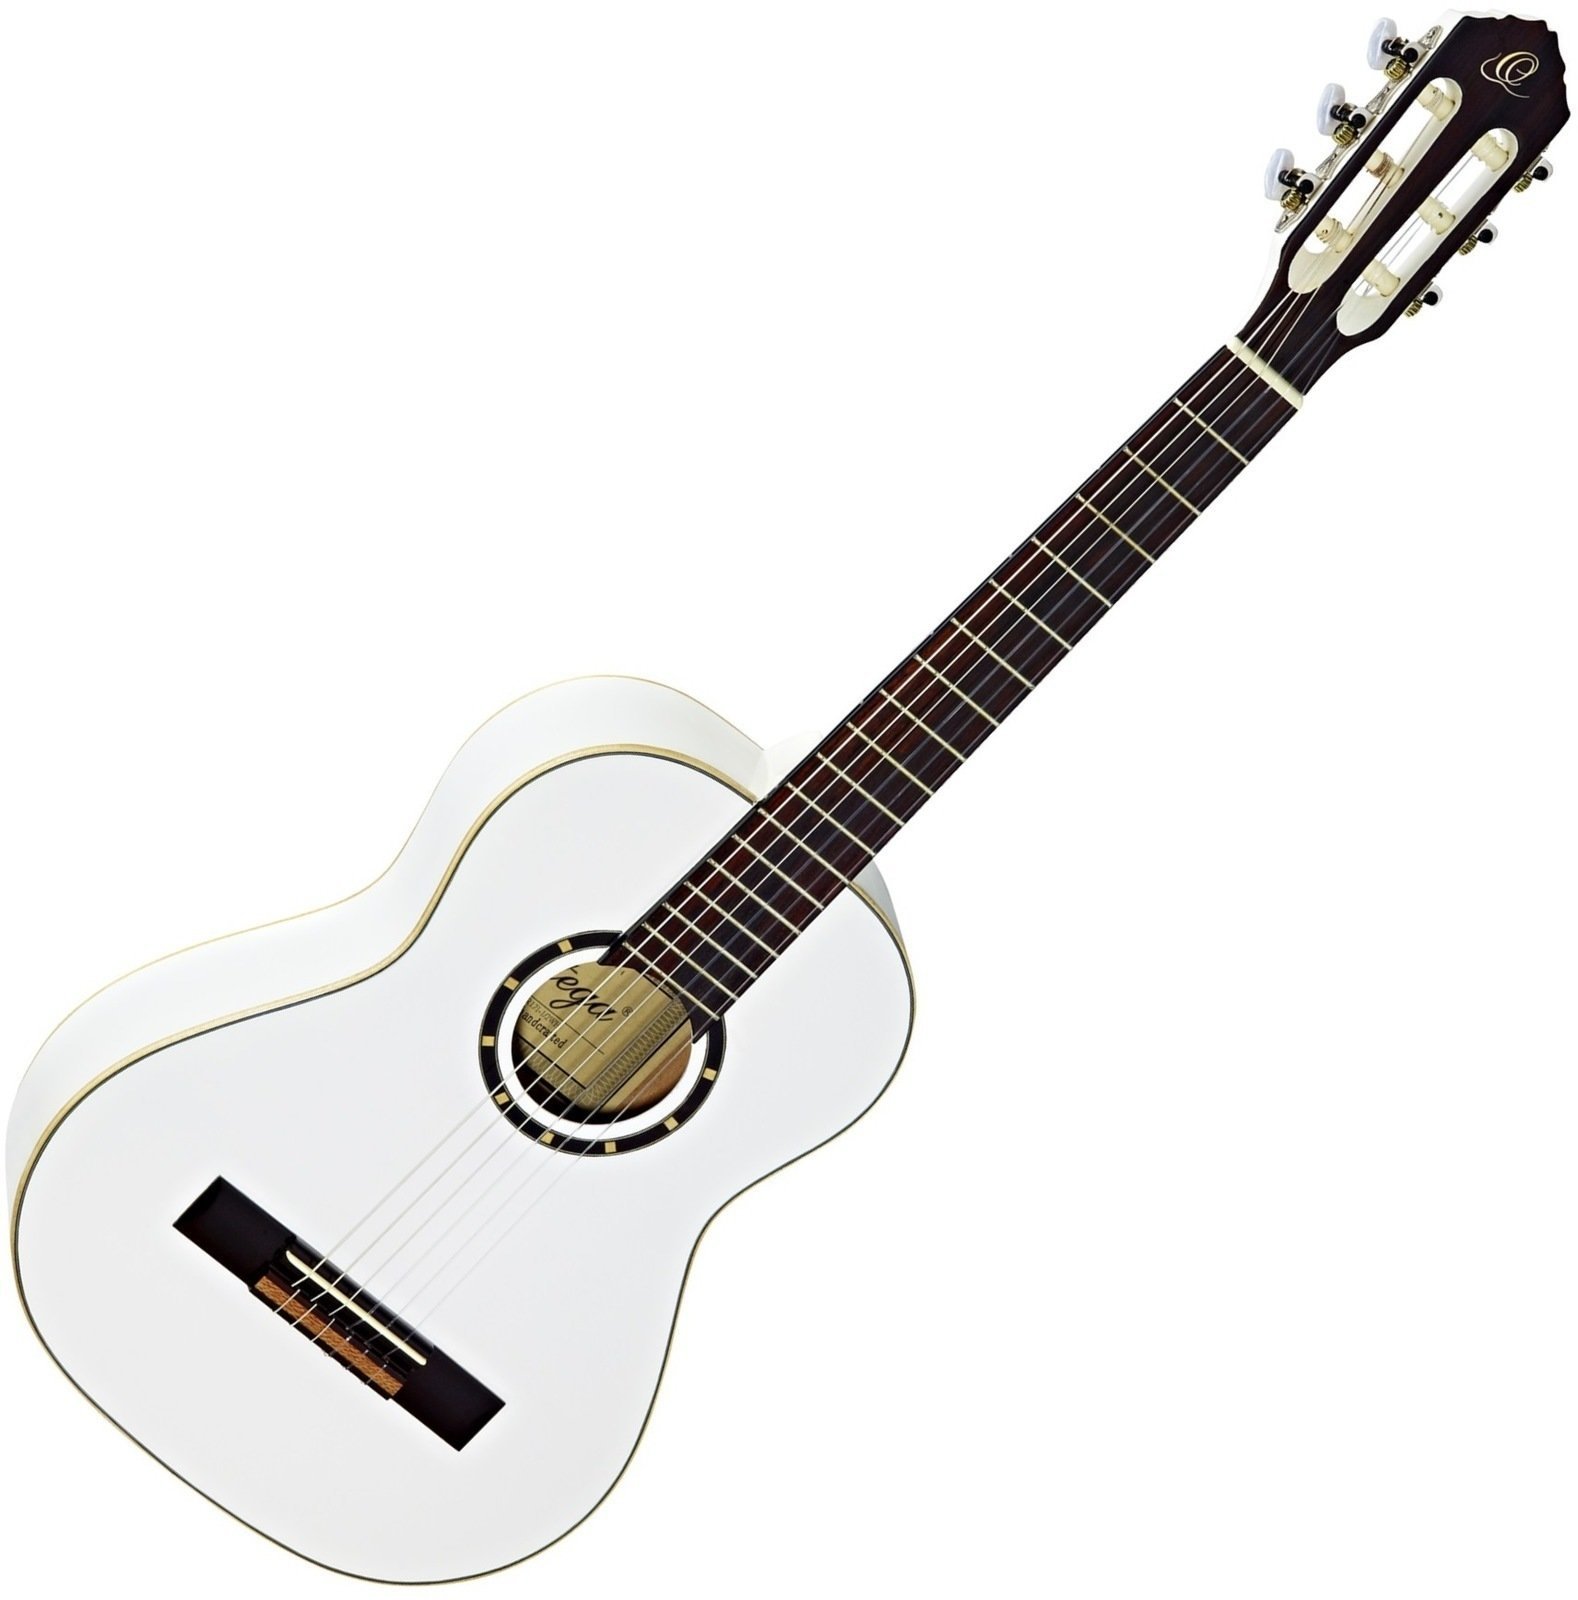 Poloviční klasická kytara pro dítě Ortega R121 1/2 Bílá